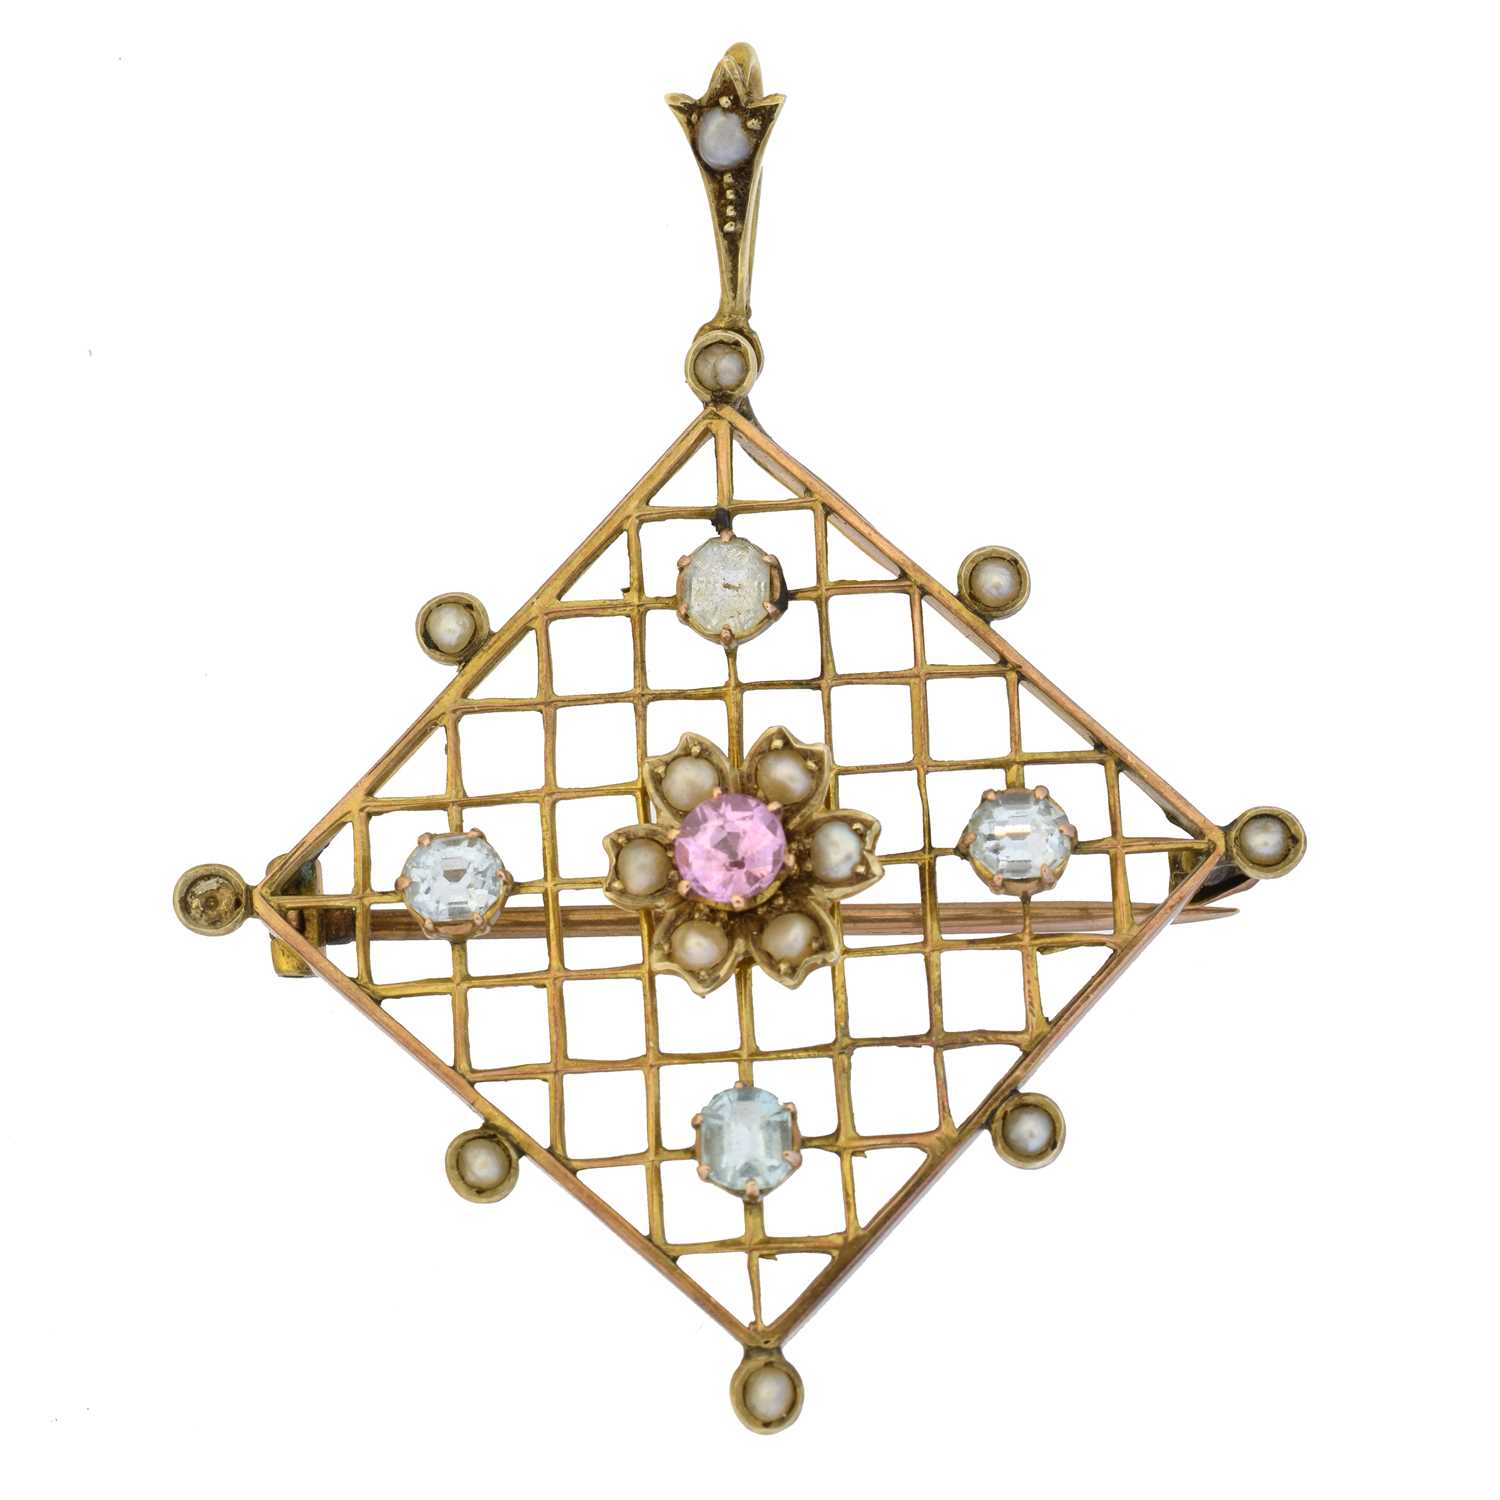 Lot 10 - An early 20th century gem-set brooch